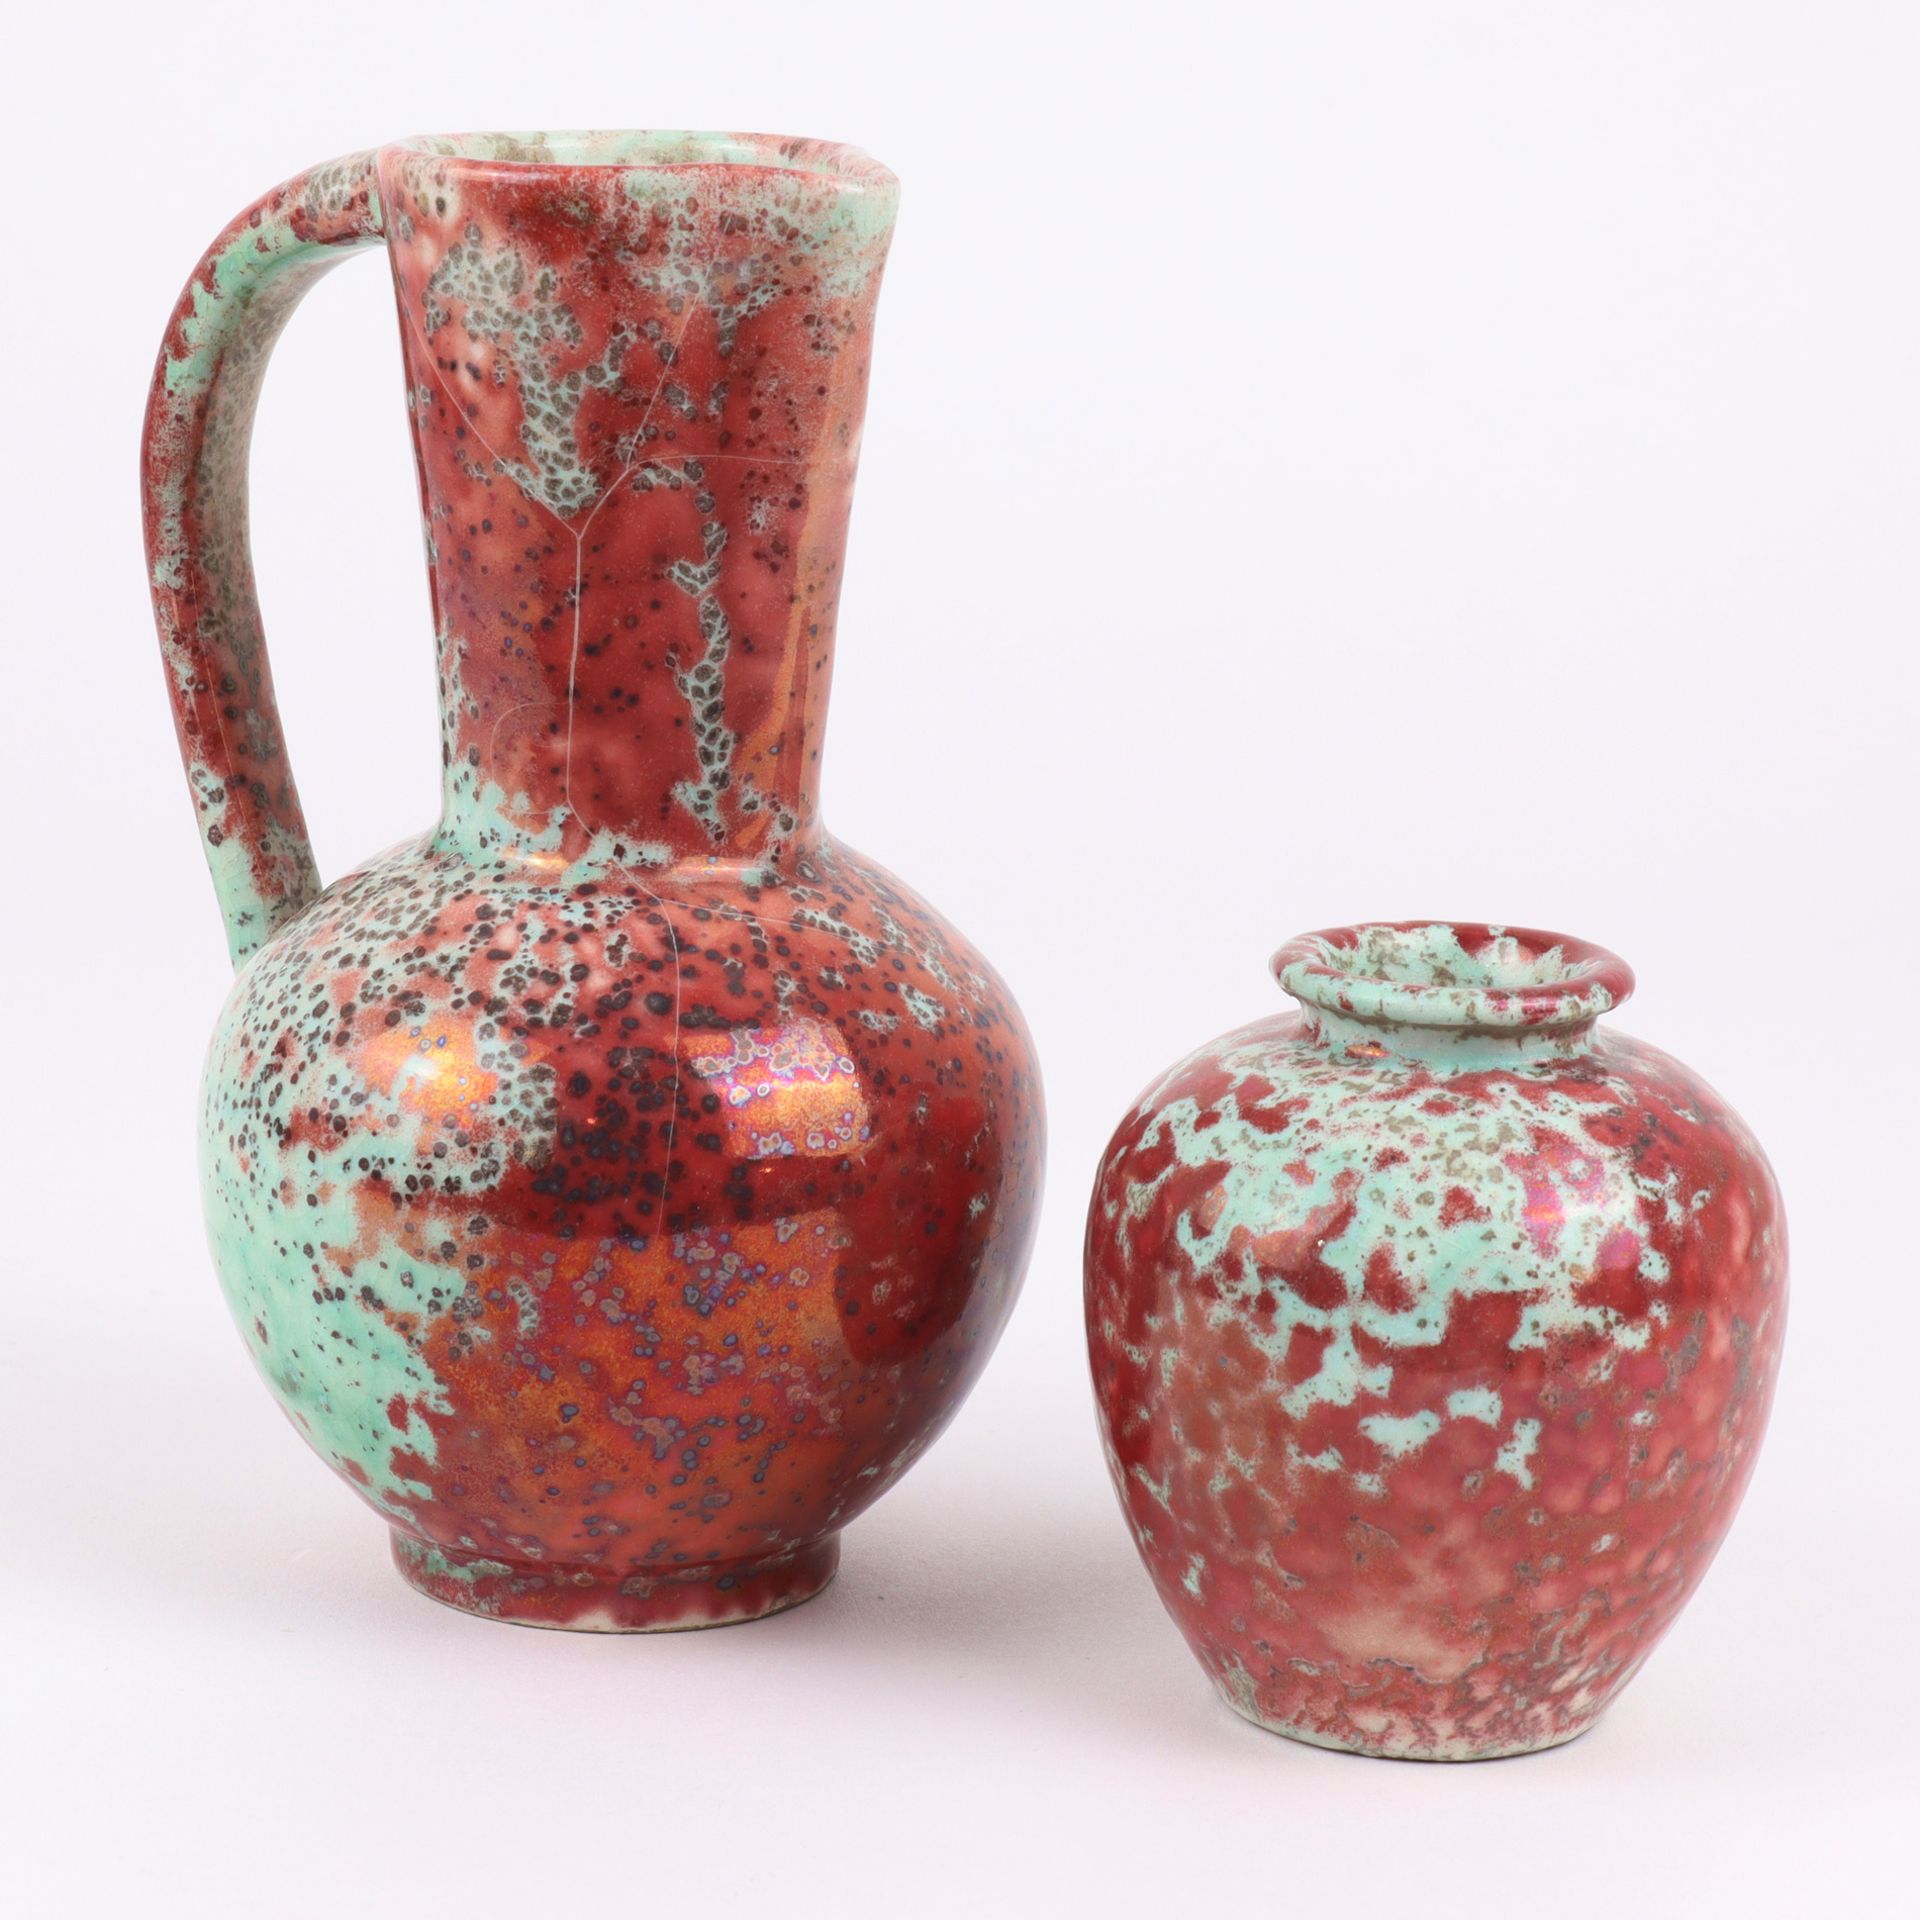 Uhlemeyer, Richard - Zwei Vasen